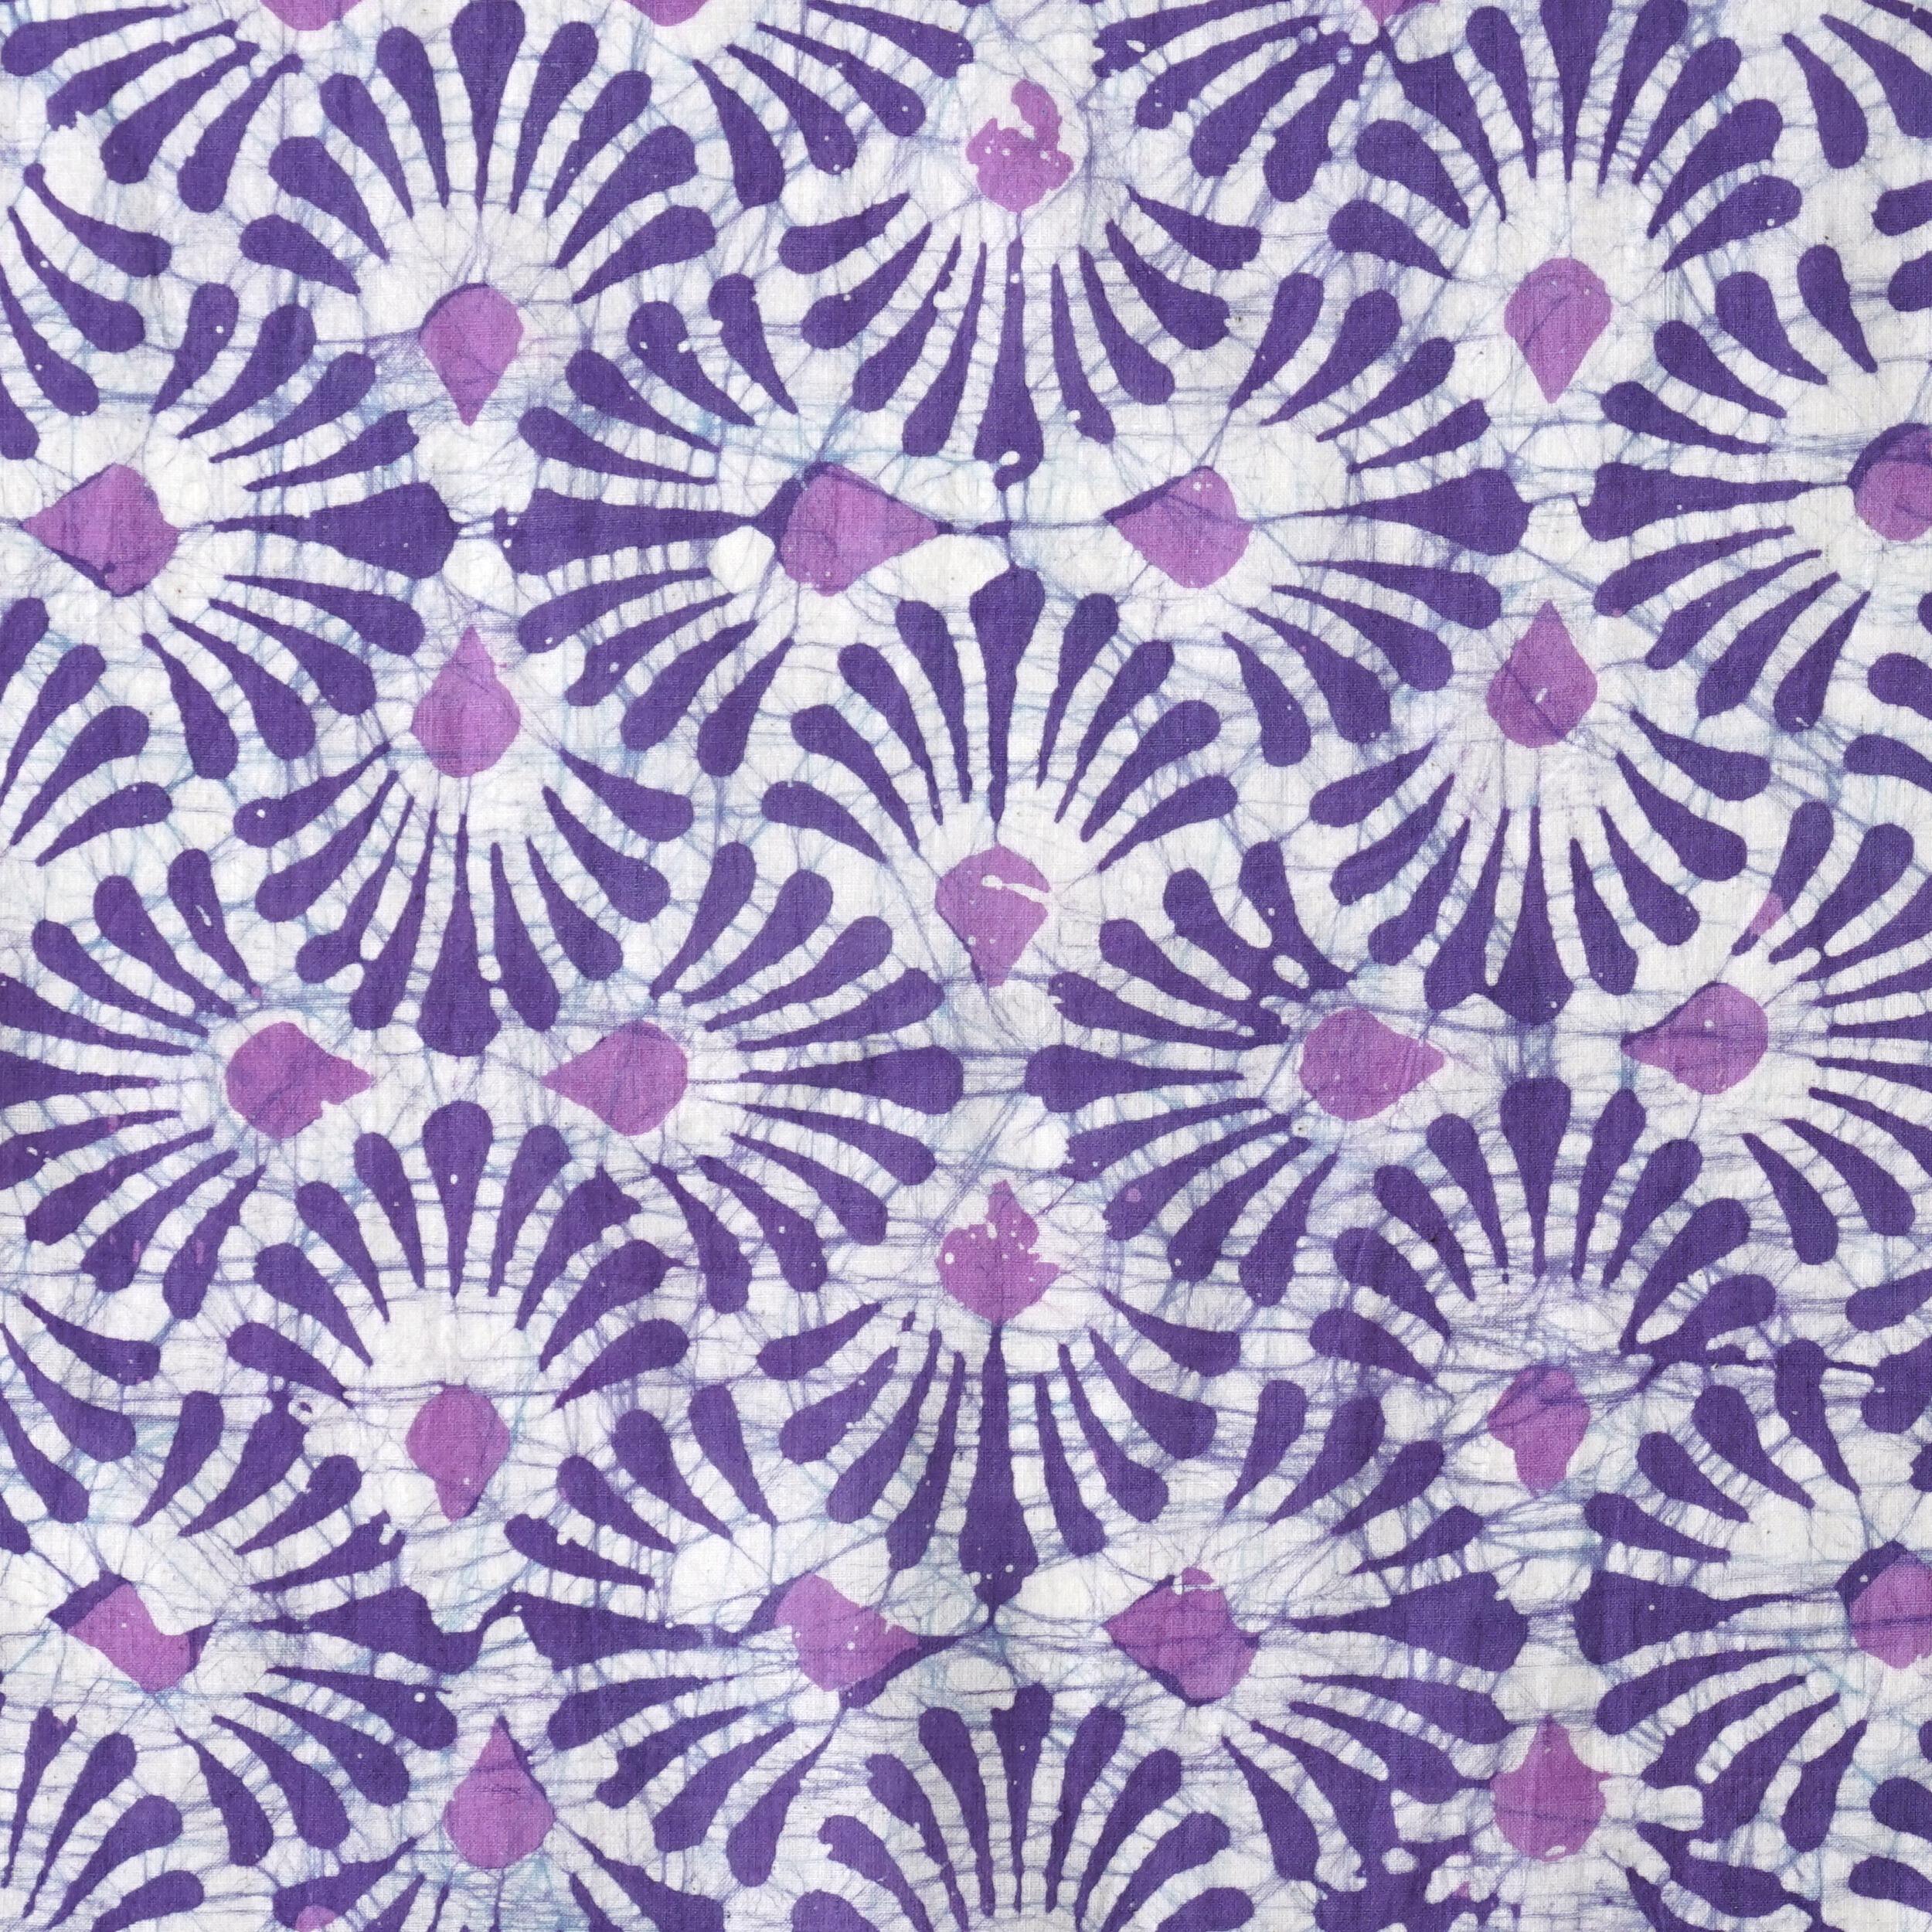 100% Block-Printed Batik Cotton Fabric From India - Castanets Design - Purple Reactive Dye - Flat